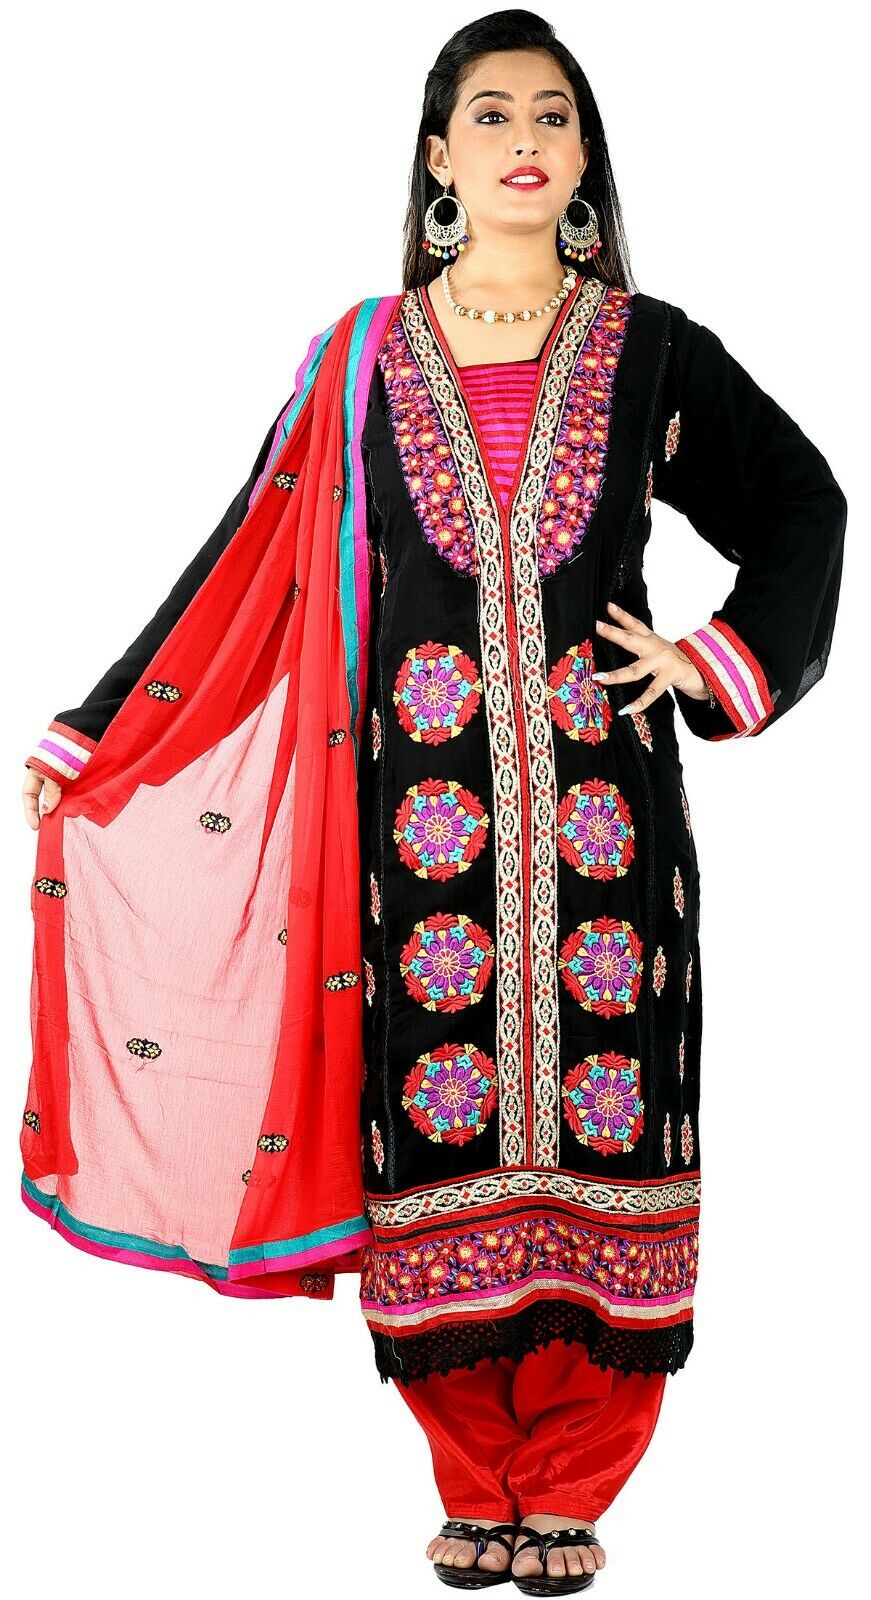 Black and Red Salwar Kameez for Women | Designer Partywear Dress for Women